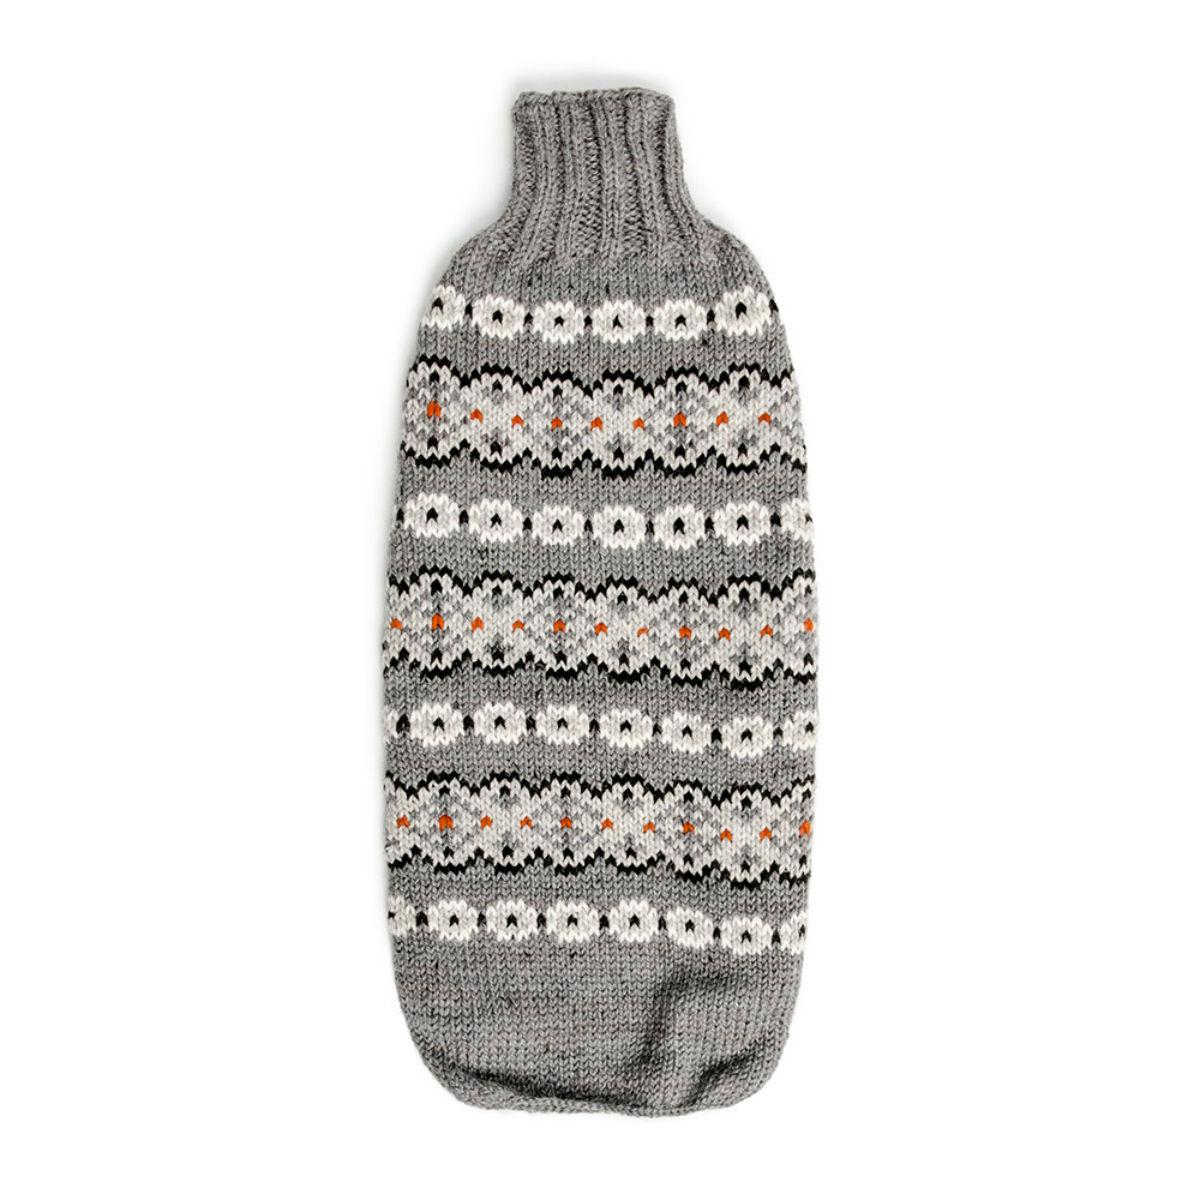 Chilly Dog Handmade Alpaca Fairisle Wool Dog Sweater - Silver